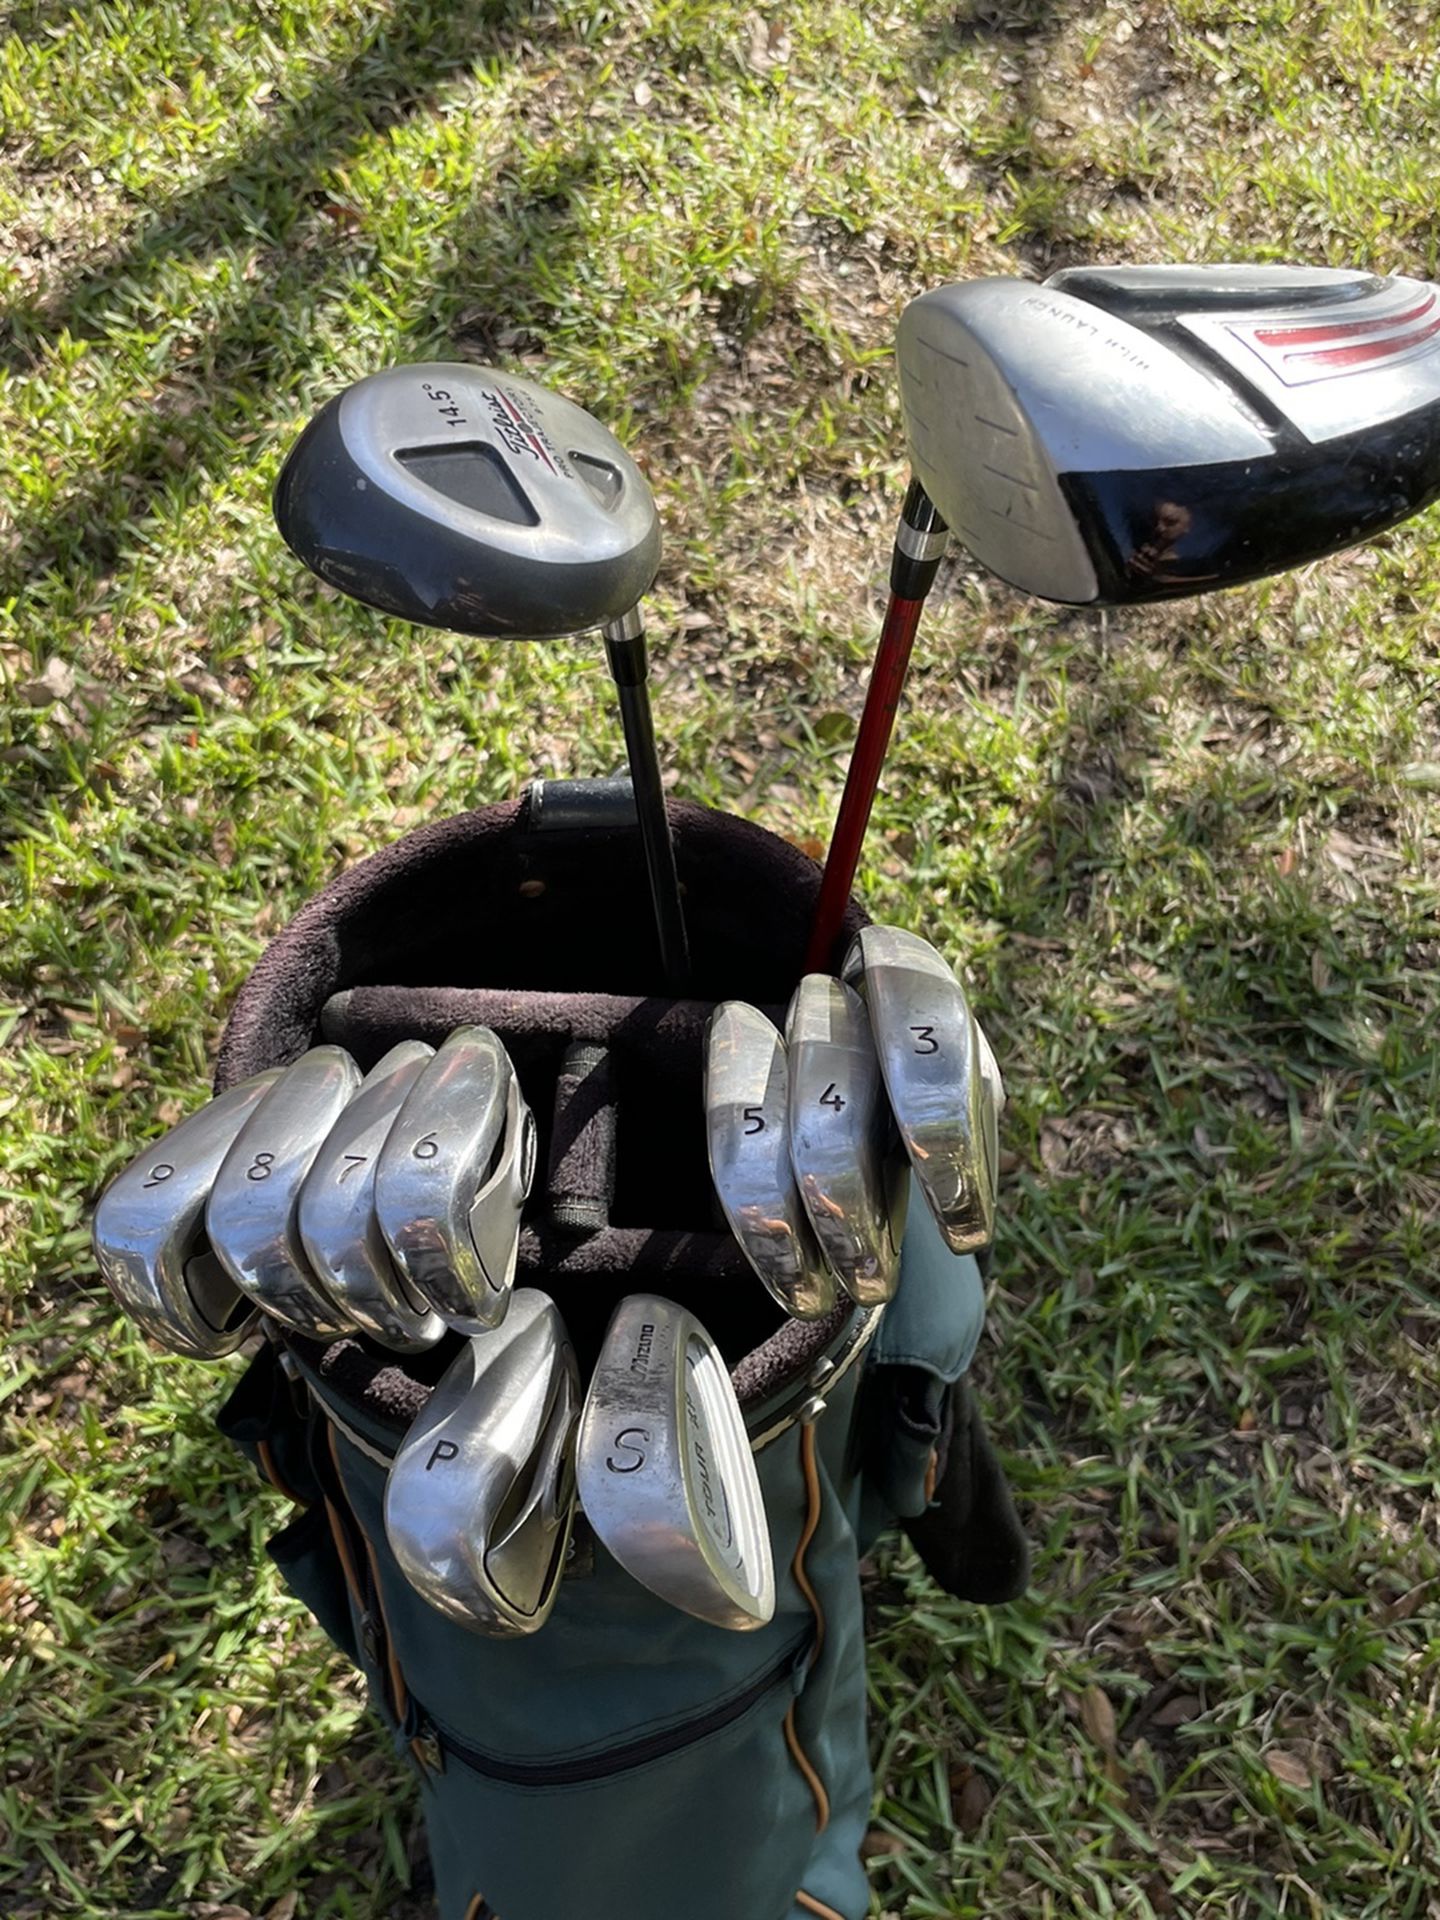 Men’s Golf Clubs (driver, 3 Wood, Iron Set and Bag)